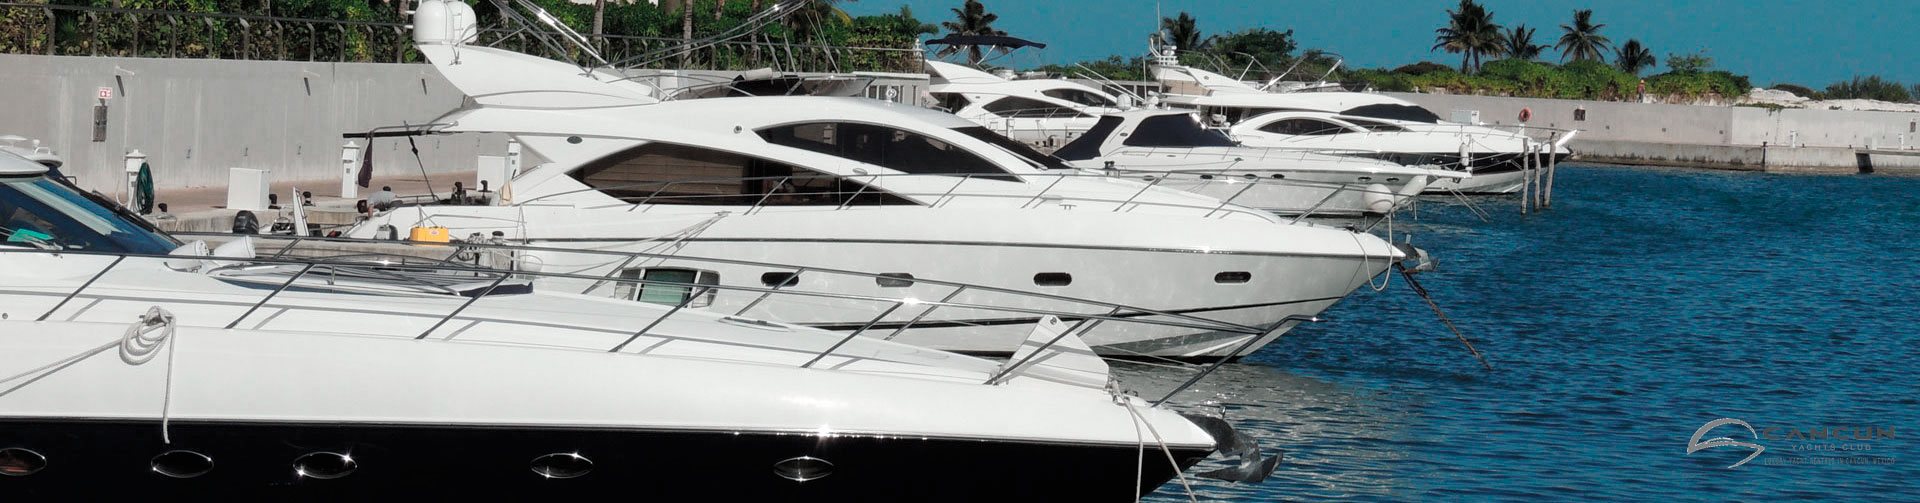 cancun yachts club